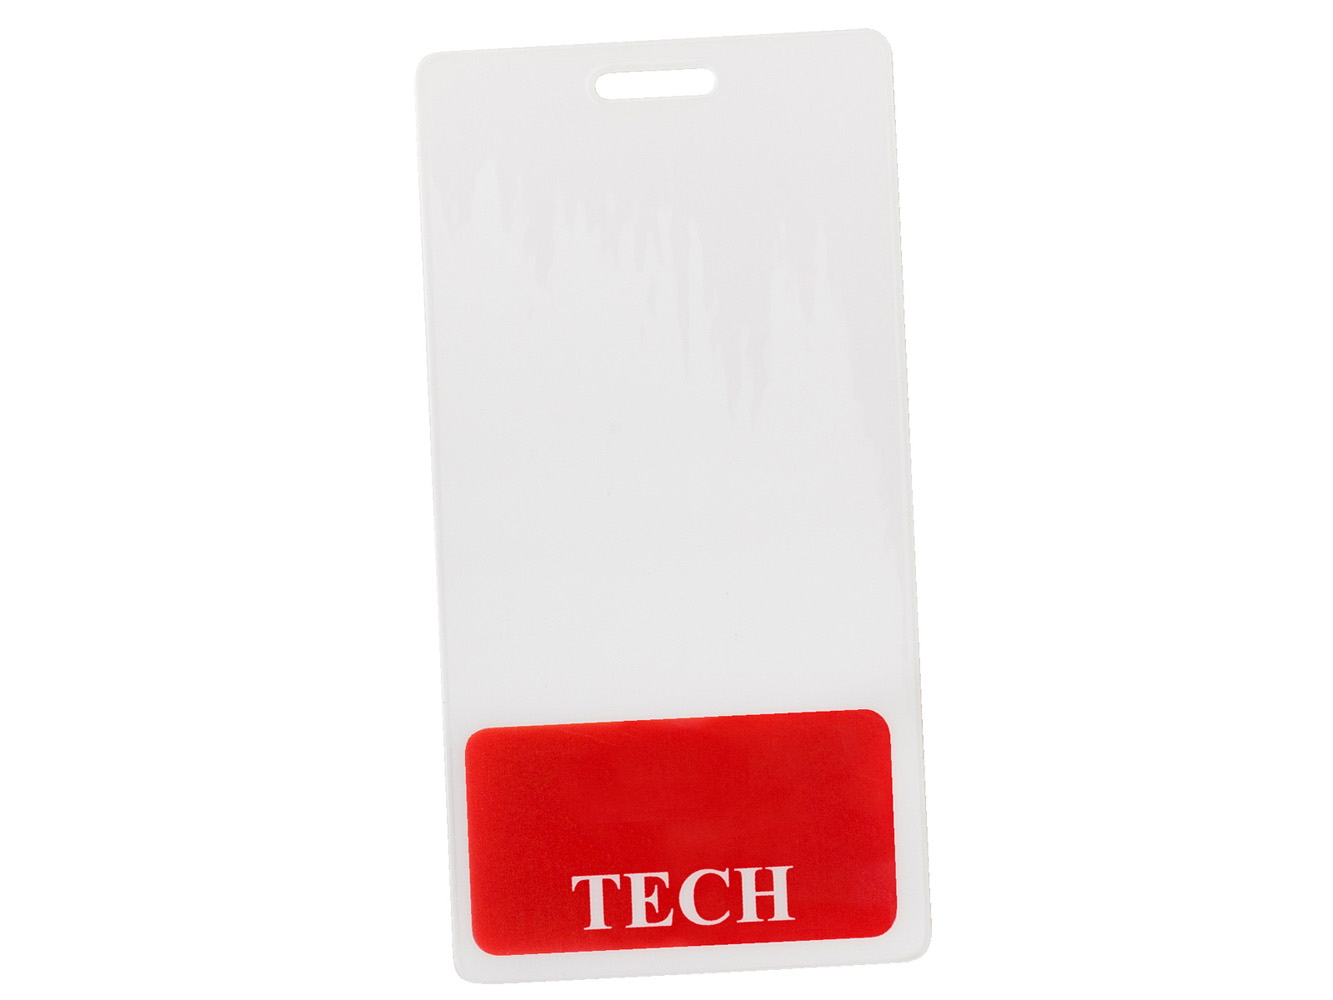 BHB10:  TECH – Technician (Red 485C) Position Badge Buddies